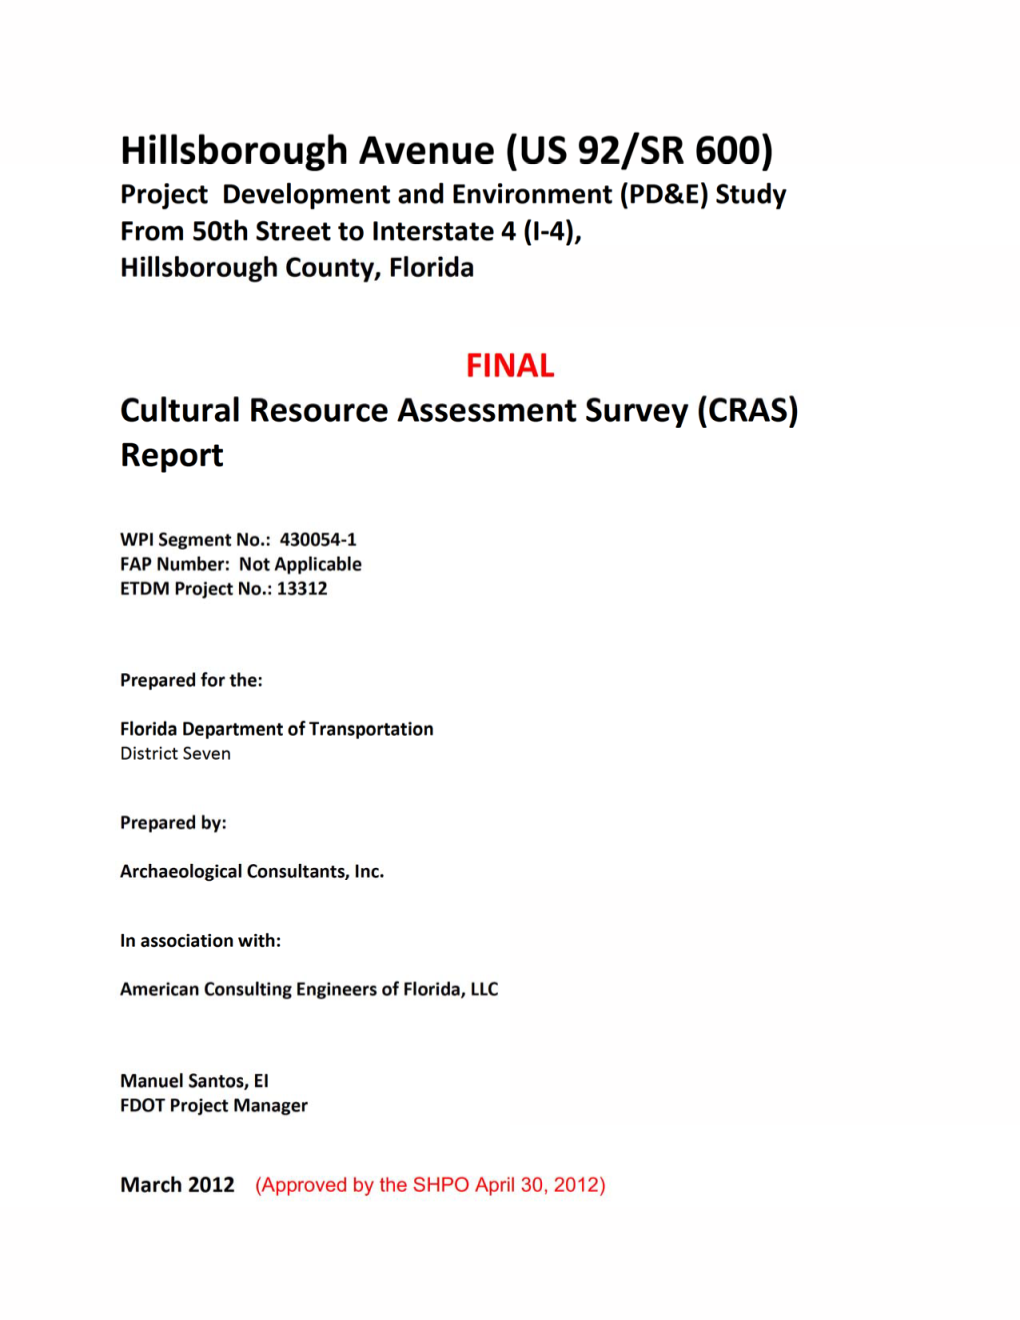 Cultural Resource Assessment Survey Report PD&E Study I March 2012